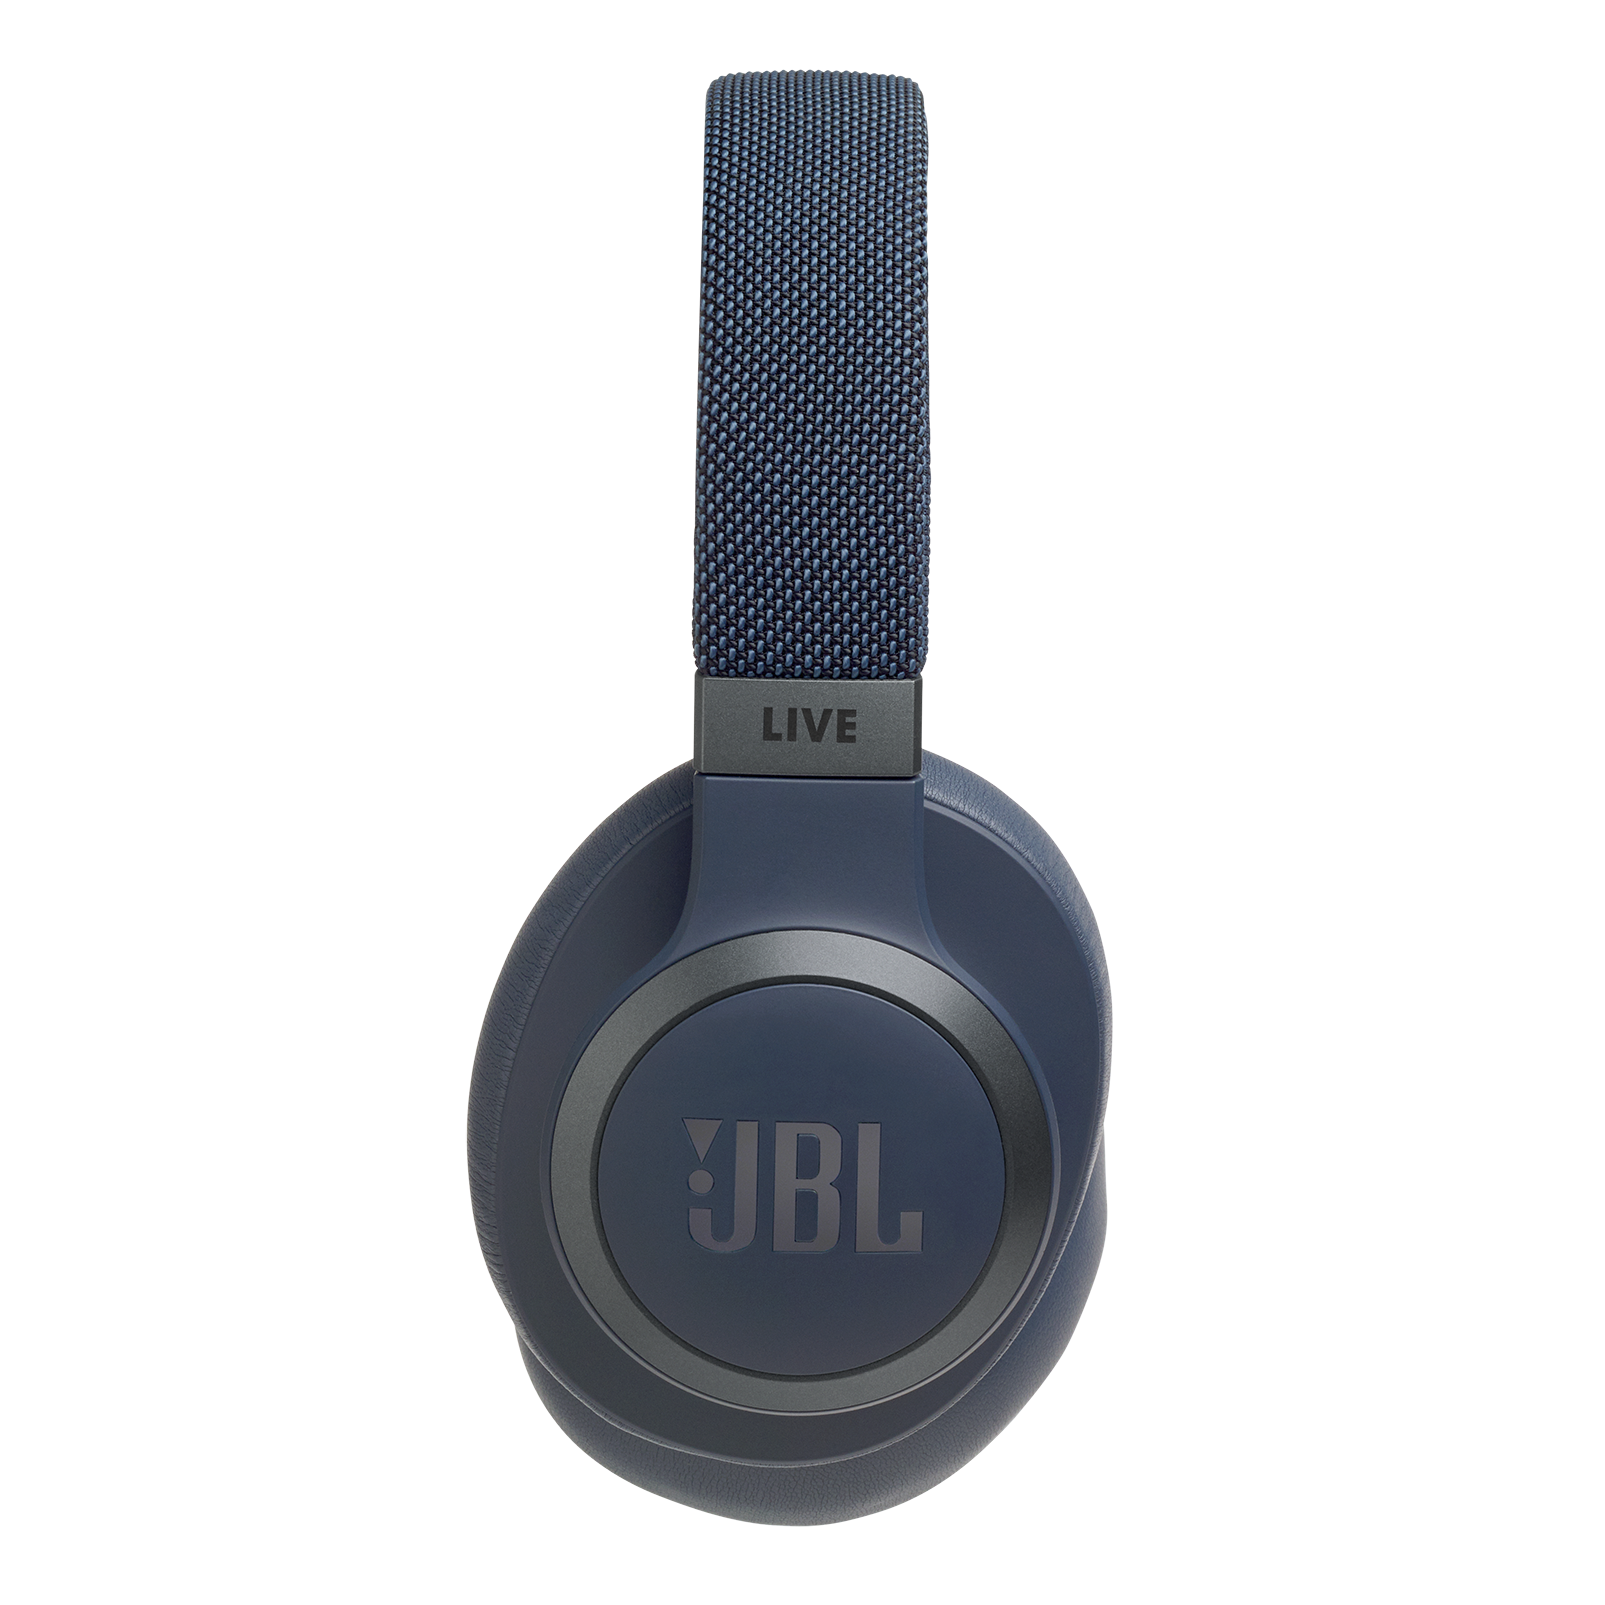 JBL Live 650BTNC - Blue - Wireless Over-Ear Noise-Cancelling Headphones - Detailshot 9